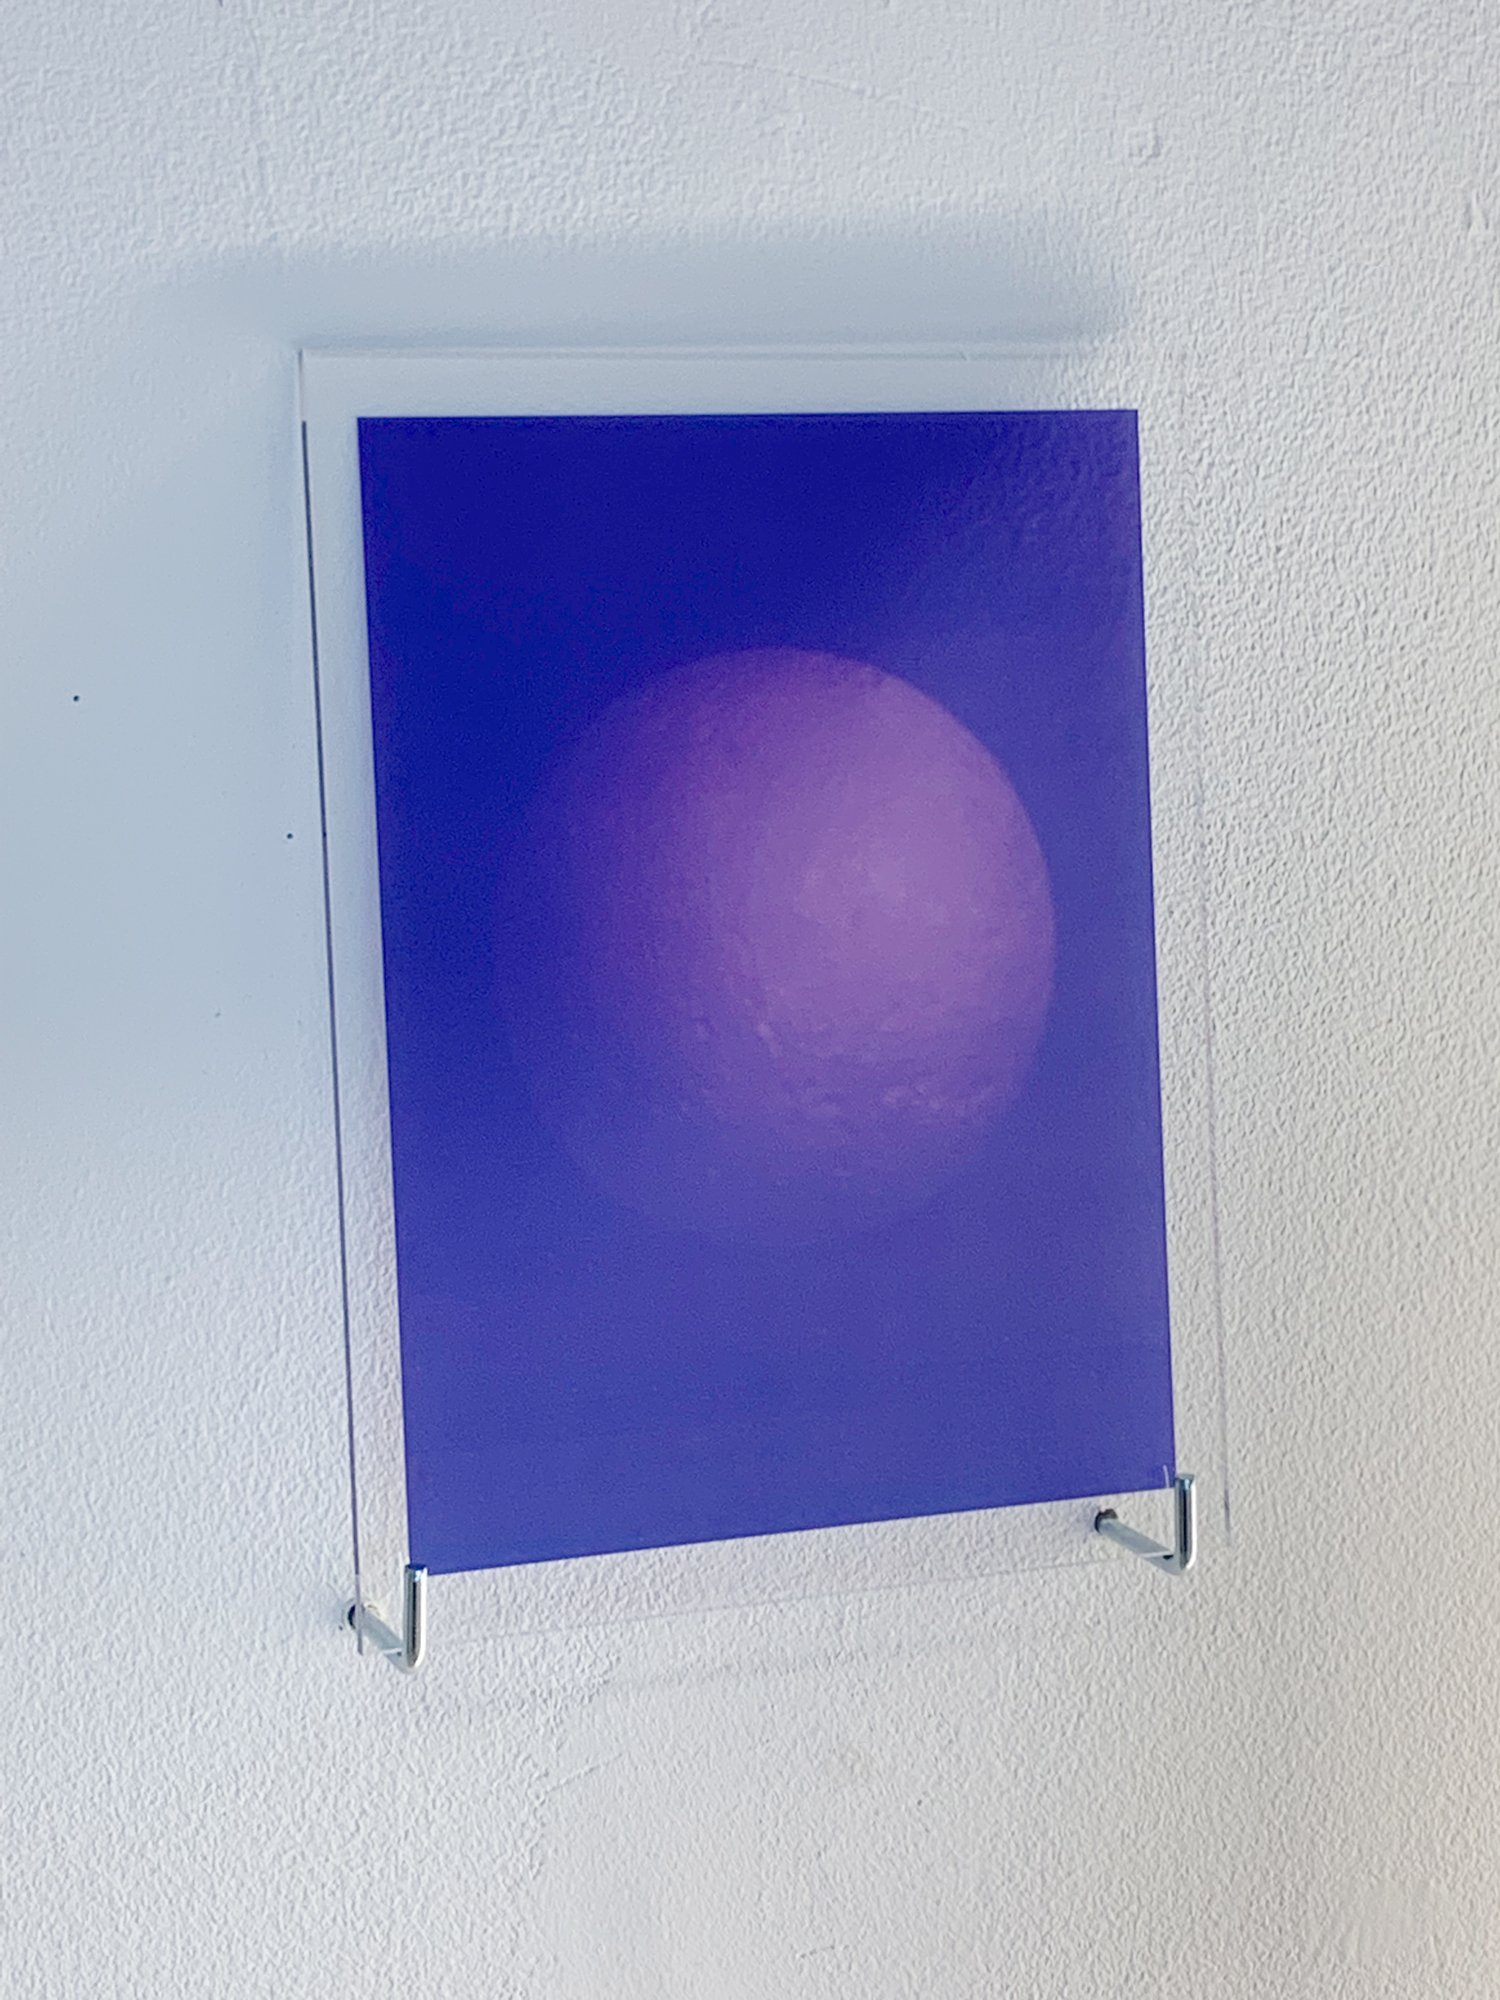  Title: Threshold: Blue (Meeting the Universe Halfway), Color Space Series  År: 2022  Medium: Photography  Description: Scanned analog C-print, UV-print on plexiglass.  Size: 24x18 cm 